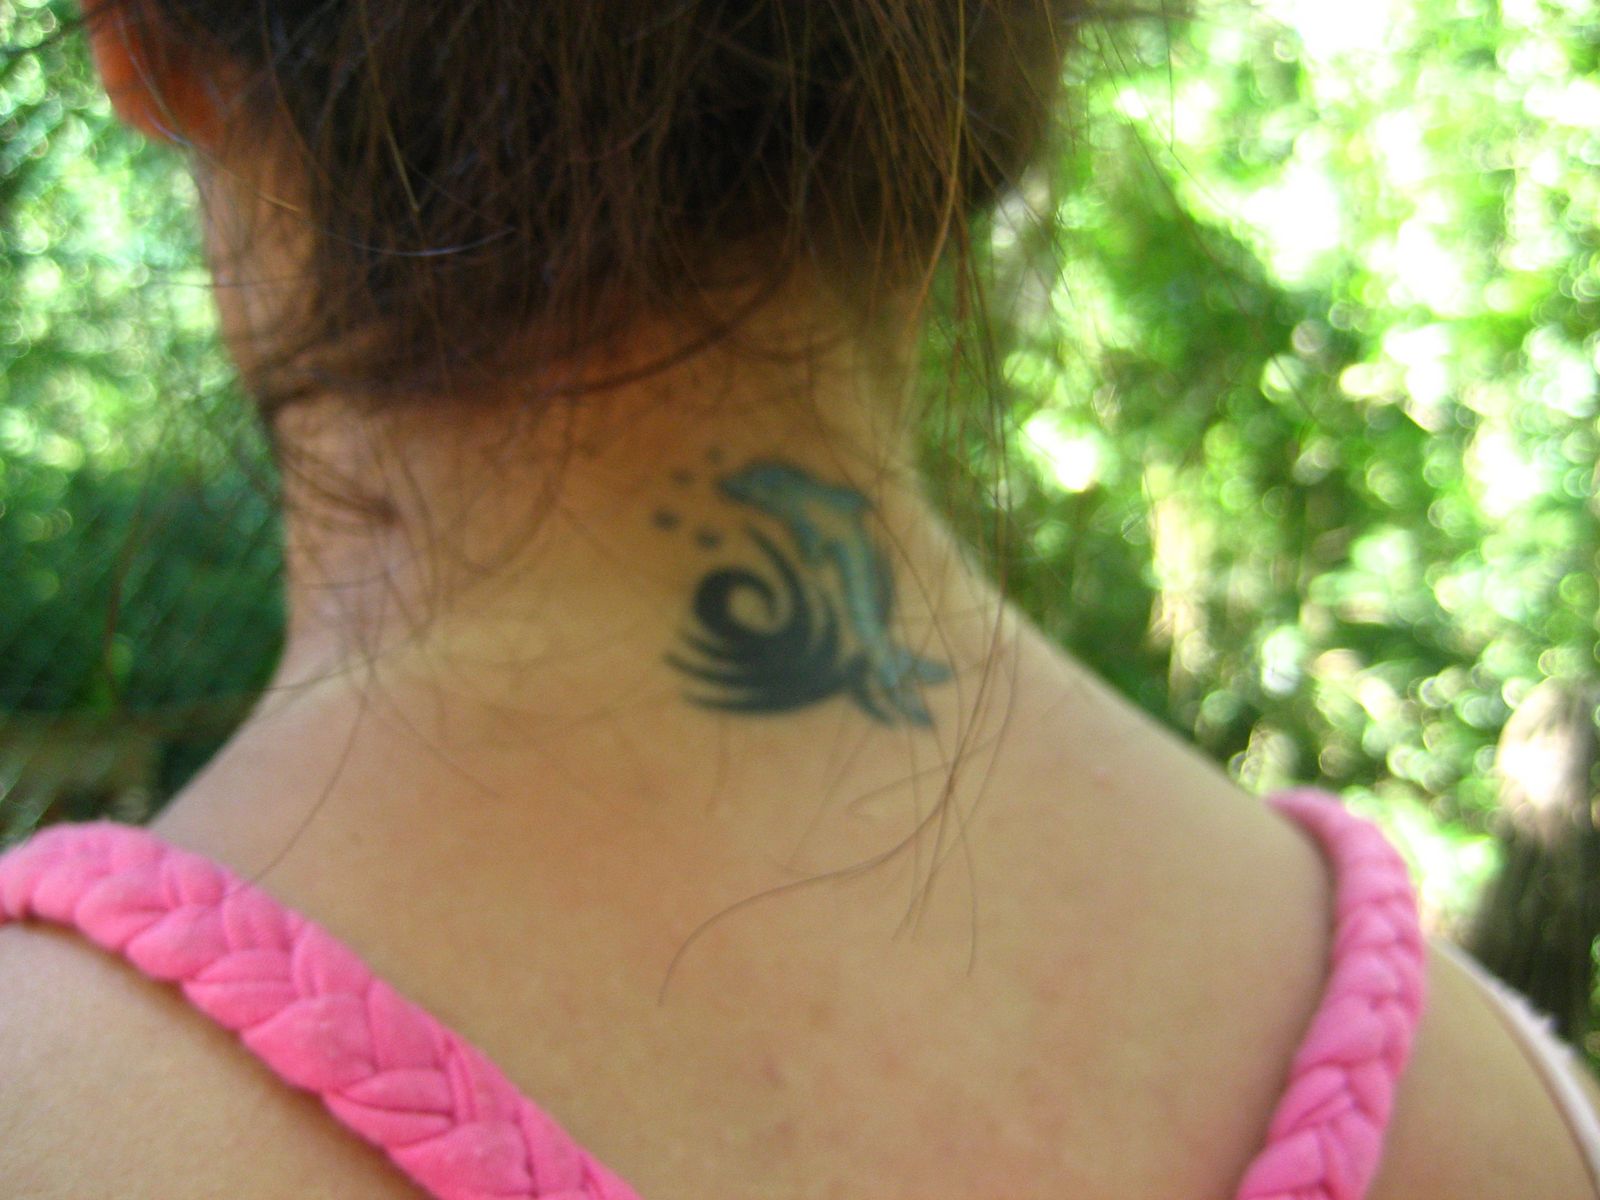 Neck Tattoos For Girls